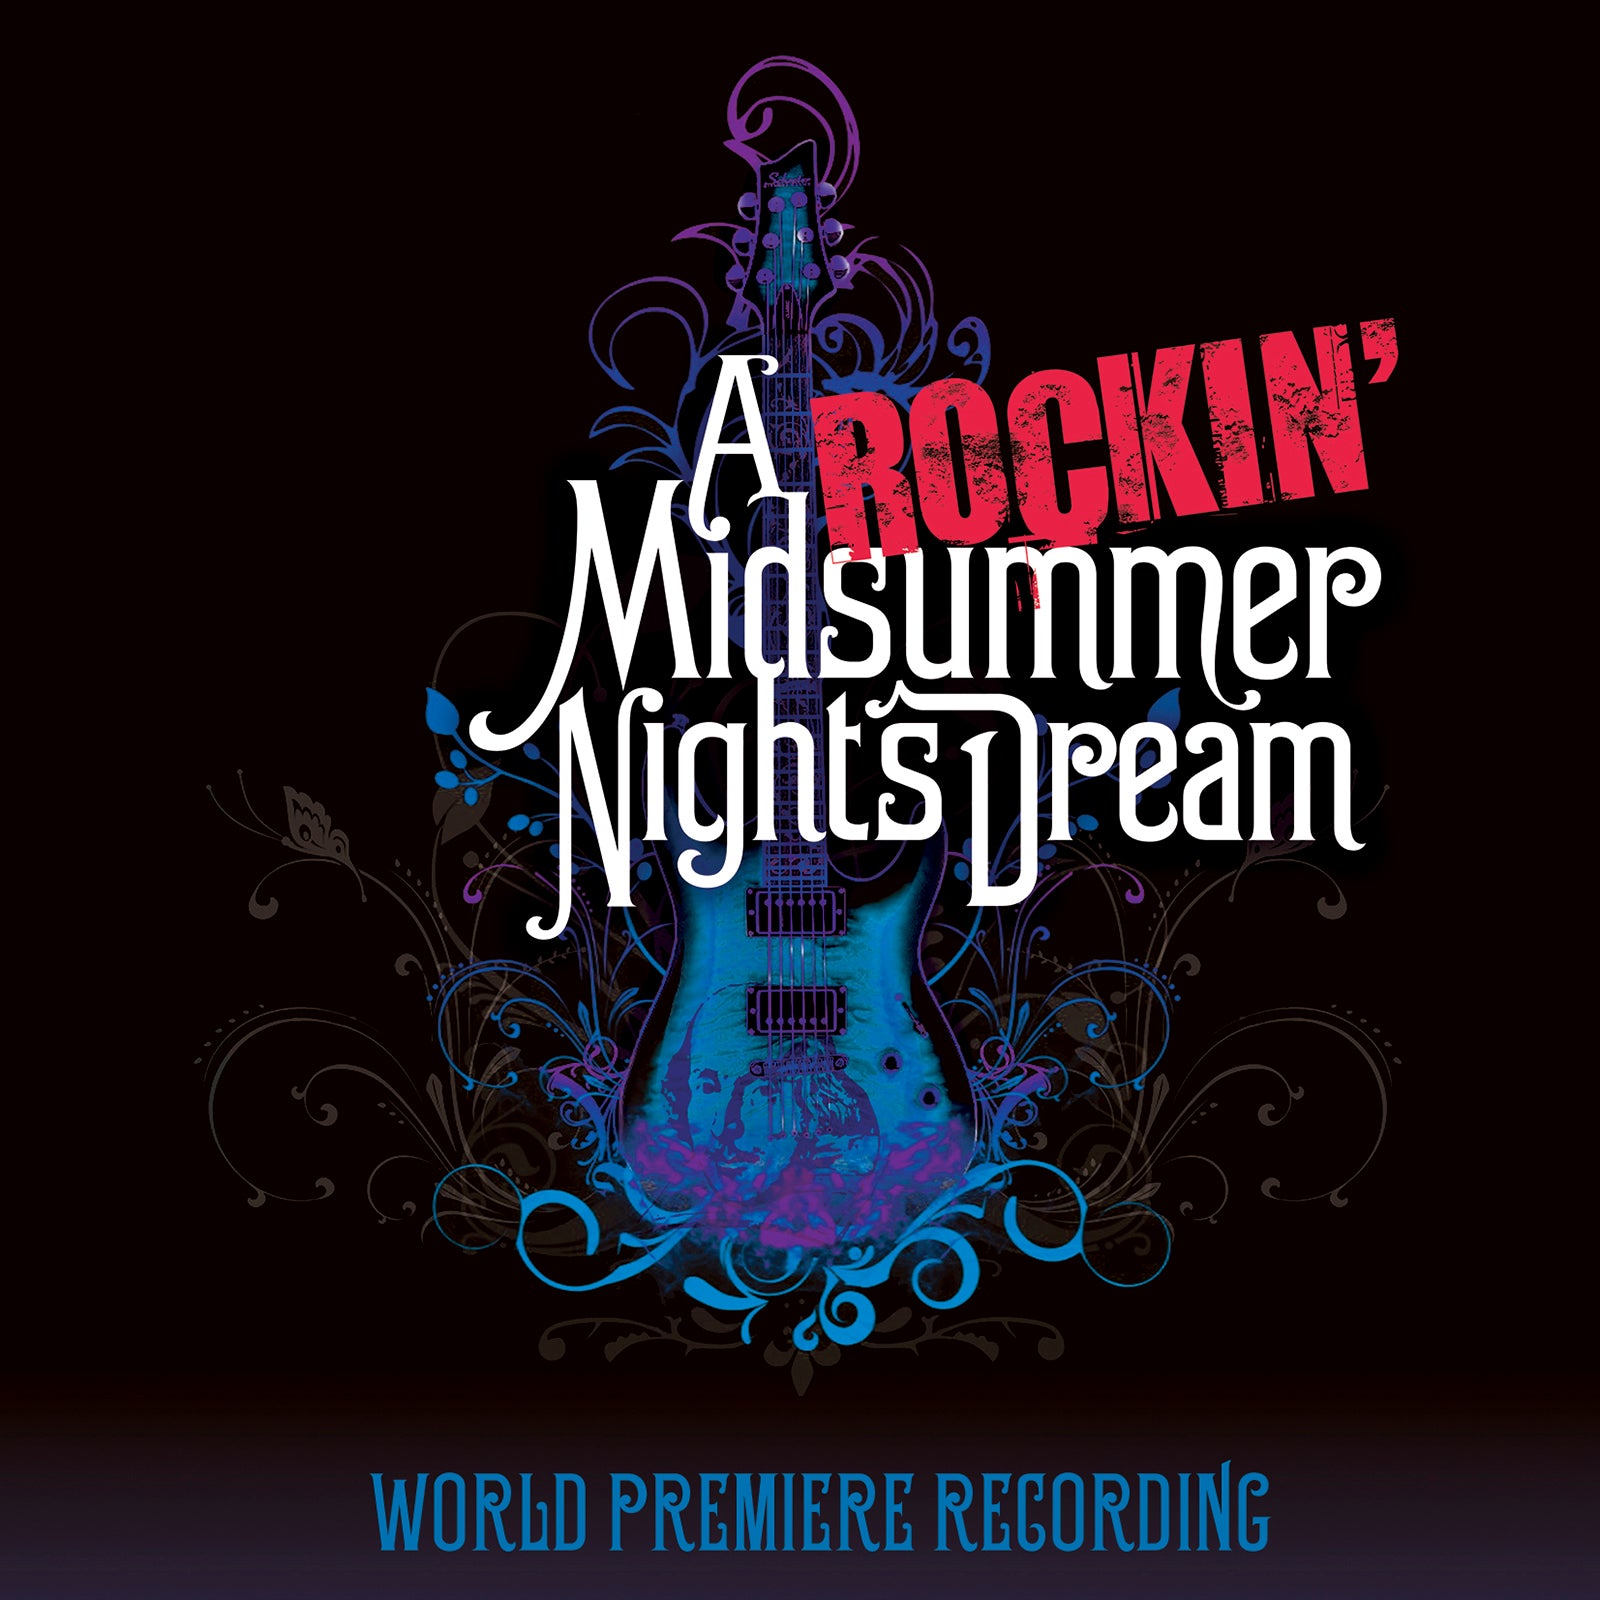 A Rockin' Midsummer Night's Dream (World Premiere Recording) [2 CD set]